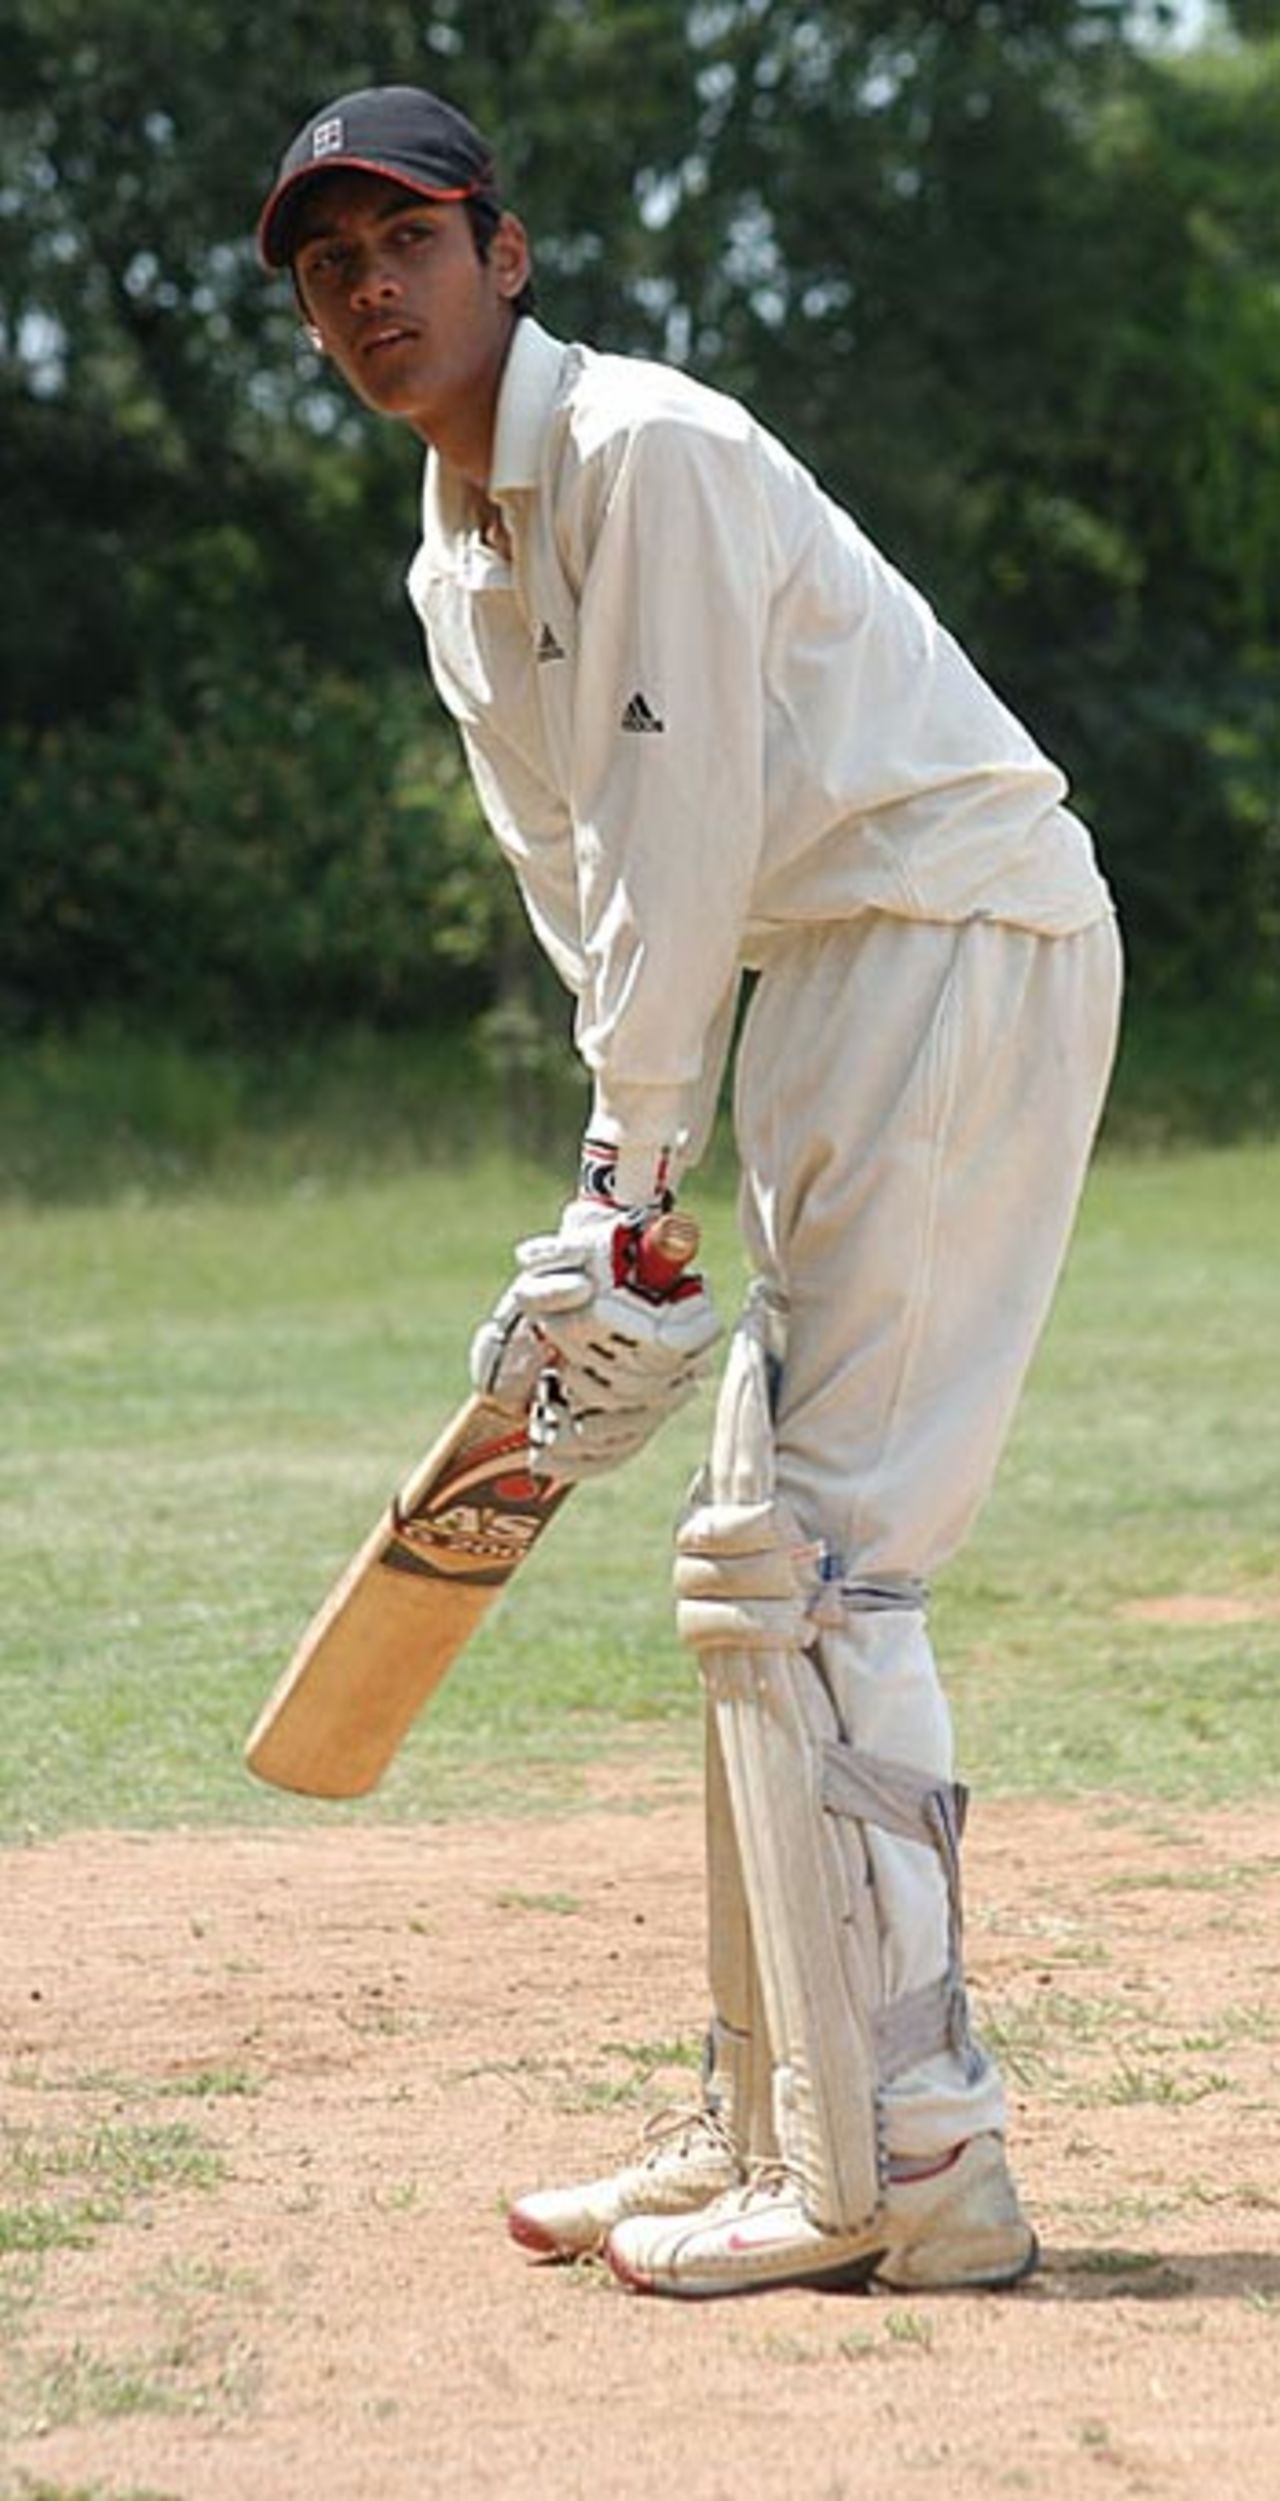 Mohammad Ayazuddin, son of Mohammad Azharuddin, in his batting stance